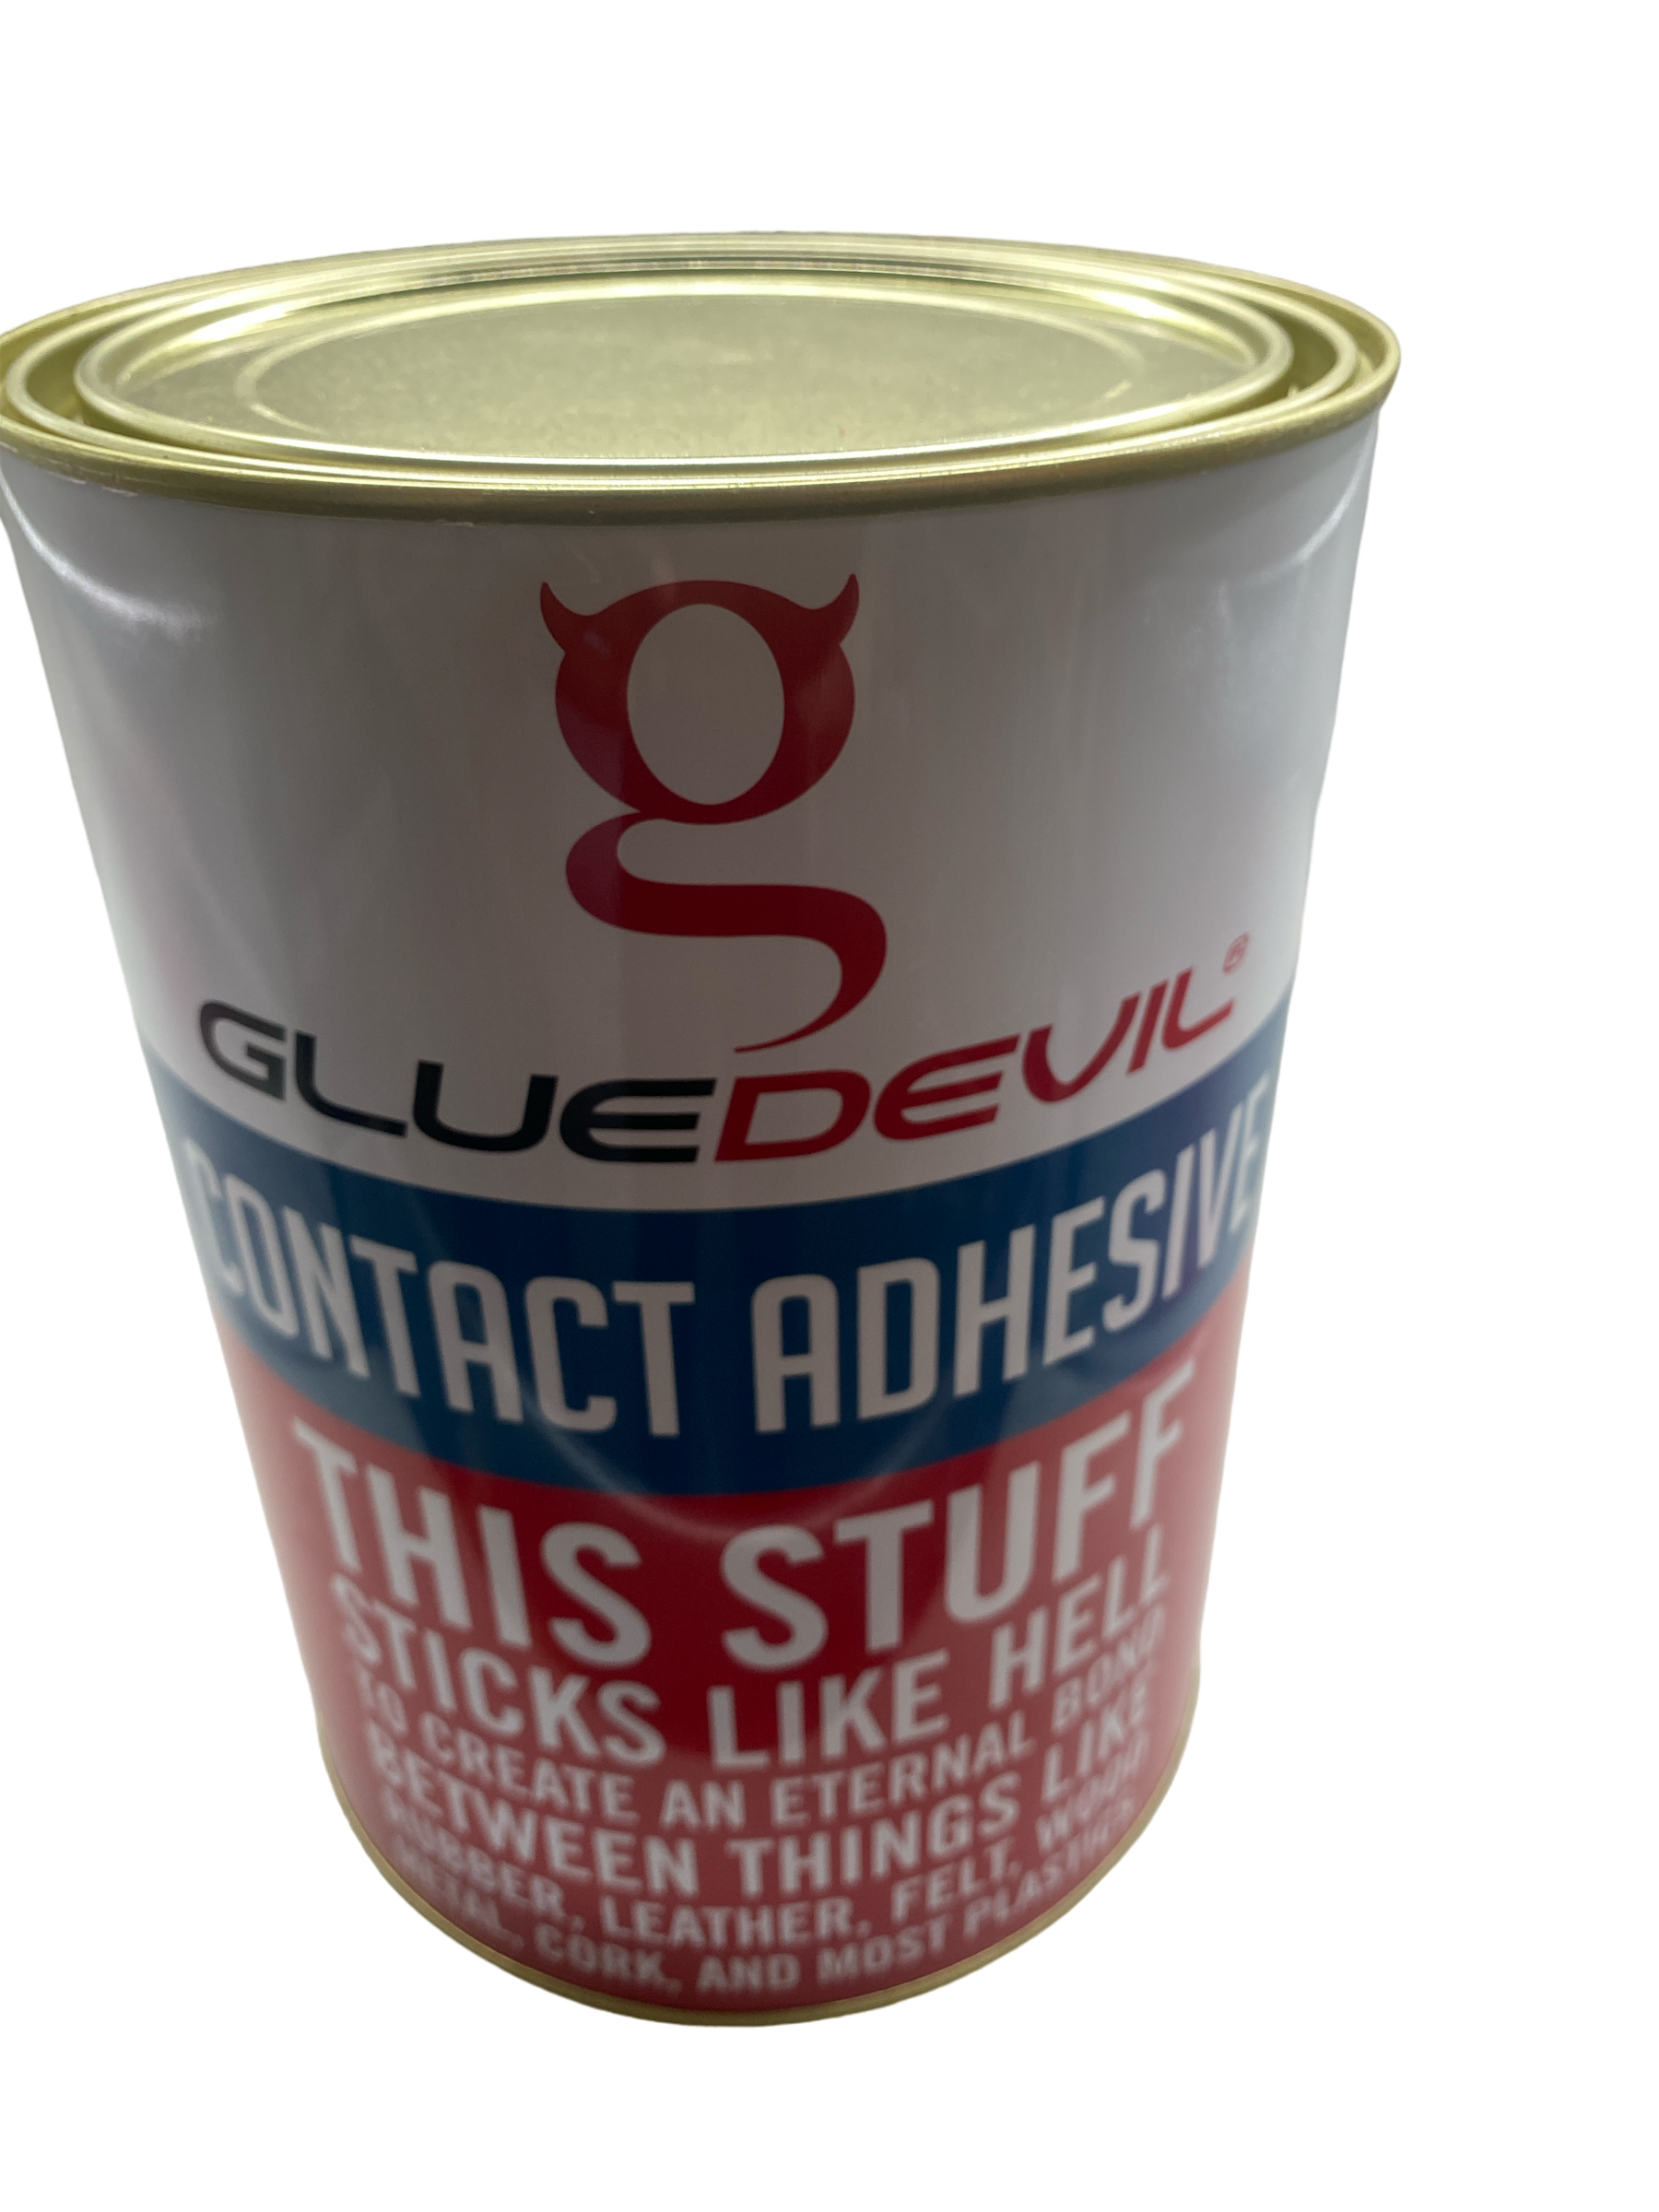 Contact Adhesive Glue Devil